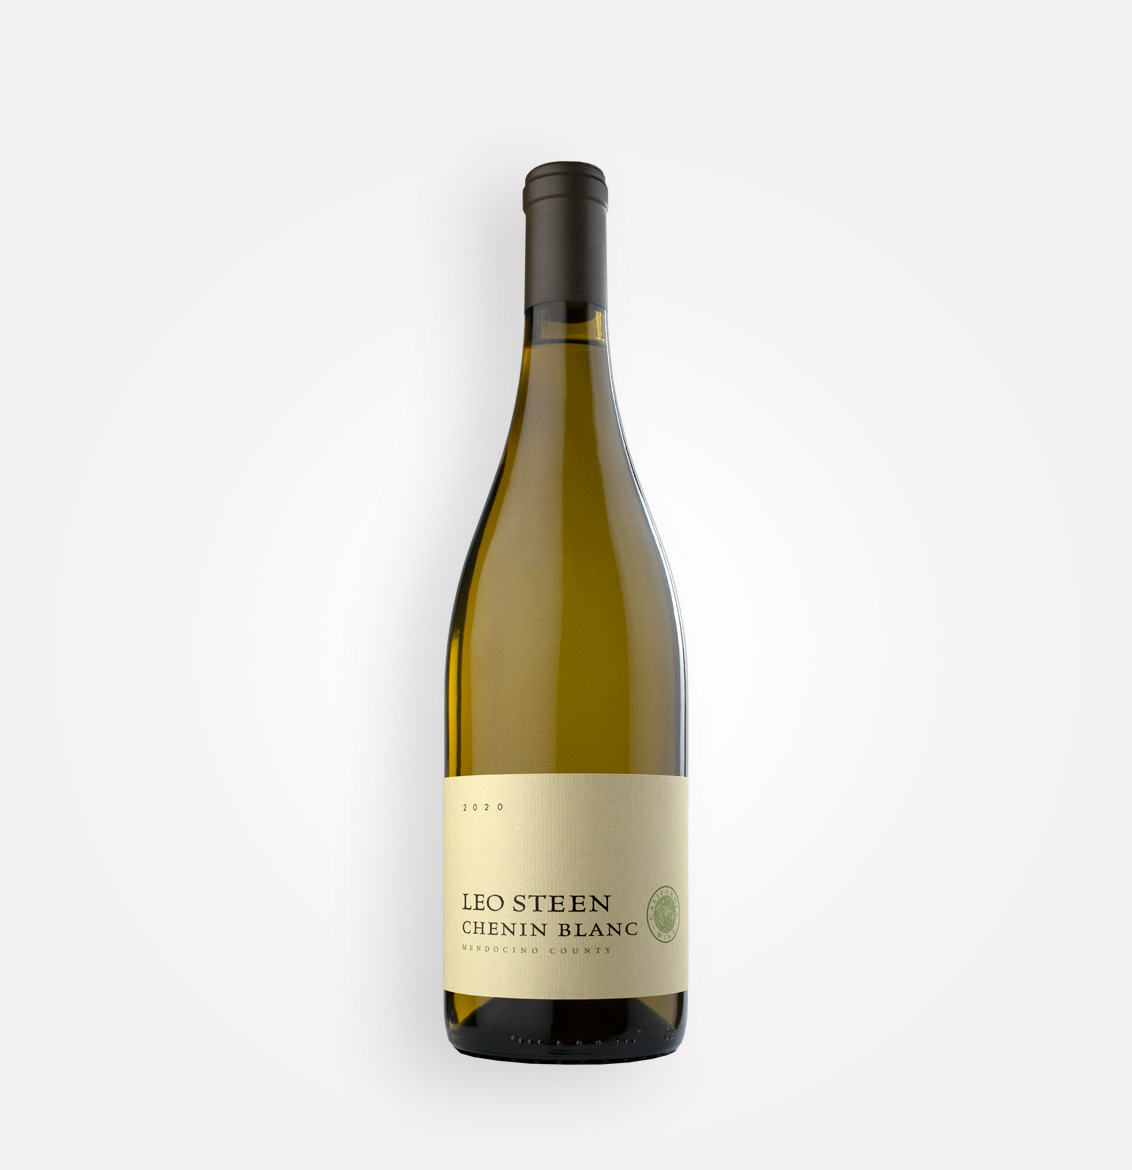 Bottle of Leo Steen 2020 Chenin Blanc wine from California’s Mendocino County